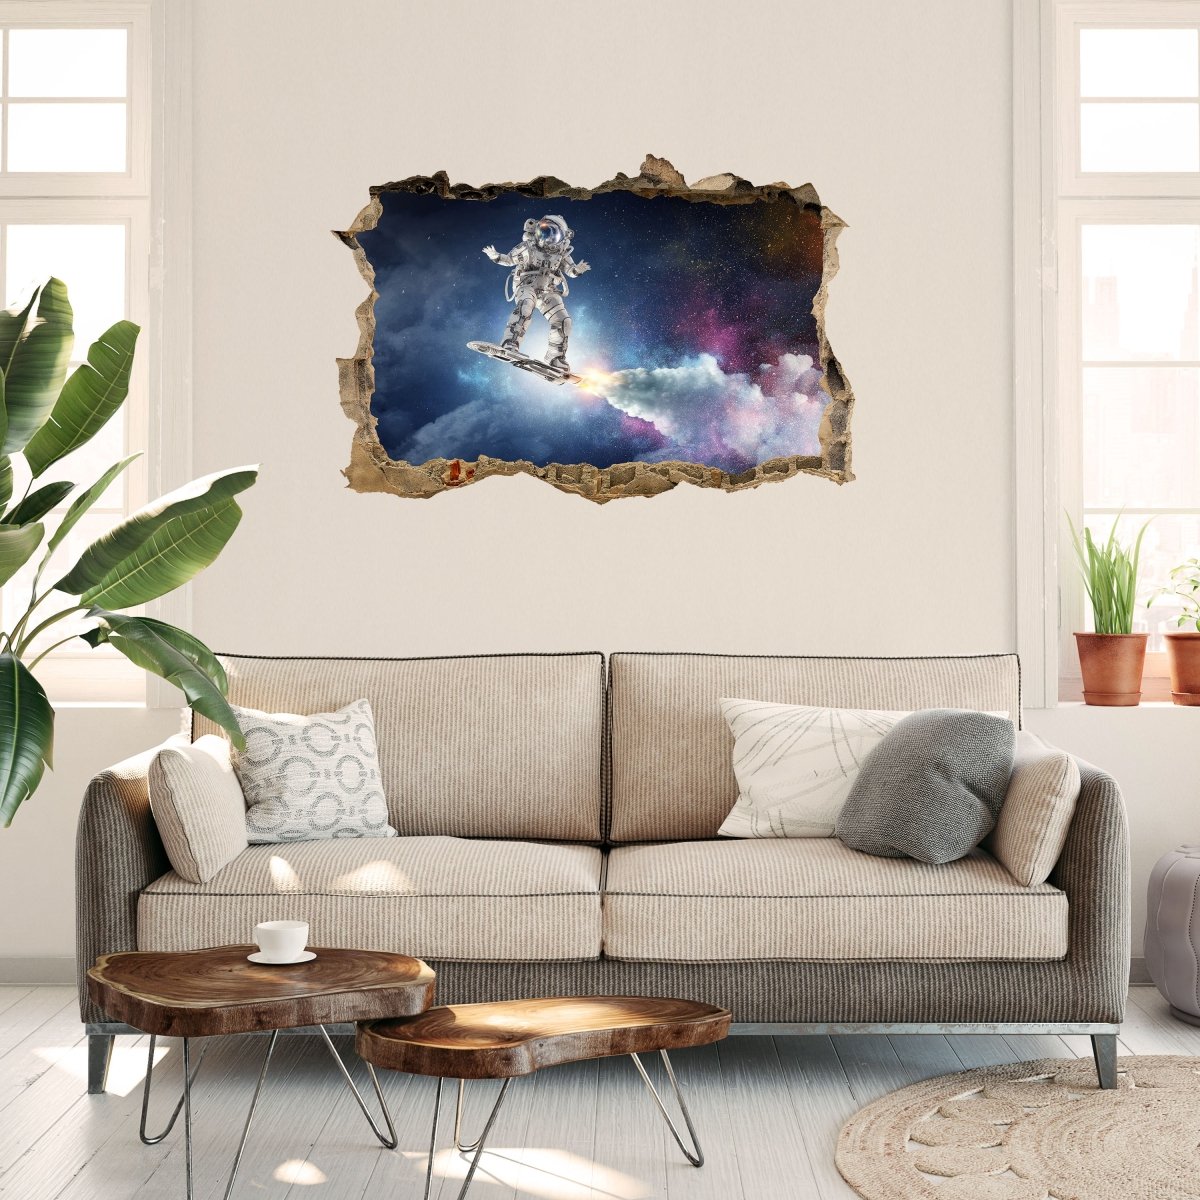 Sticker mural 3D astronaute sur hoverboard, espace extra-atmosphérique - Sticker mural M1115